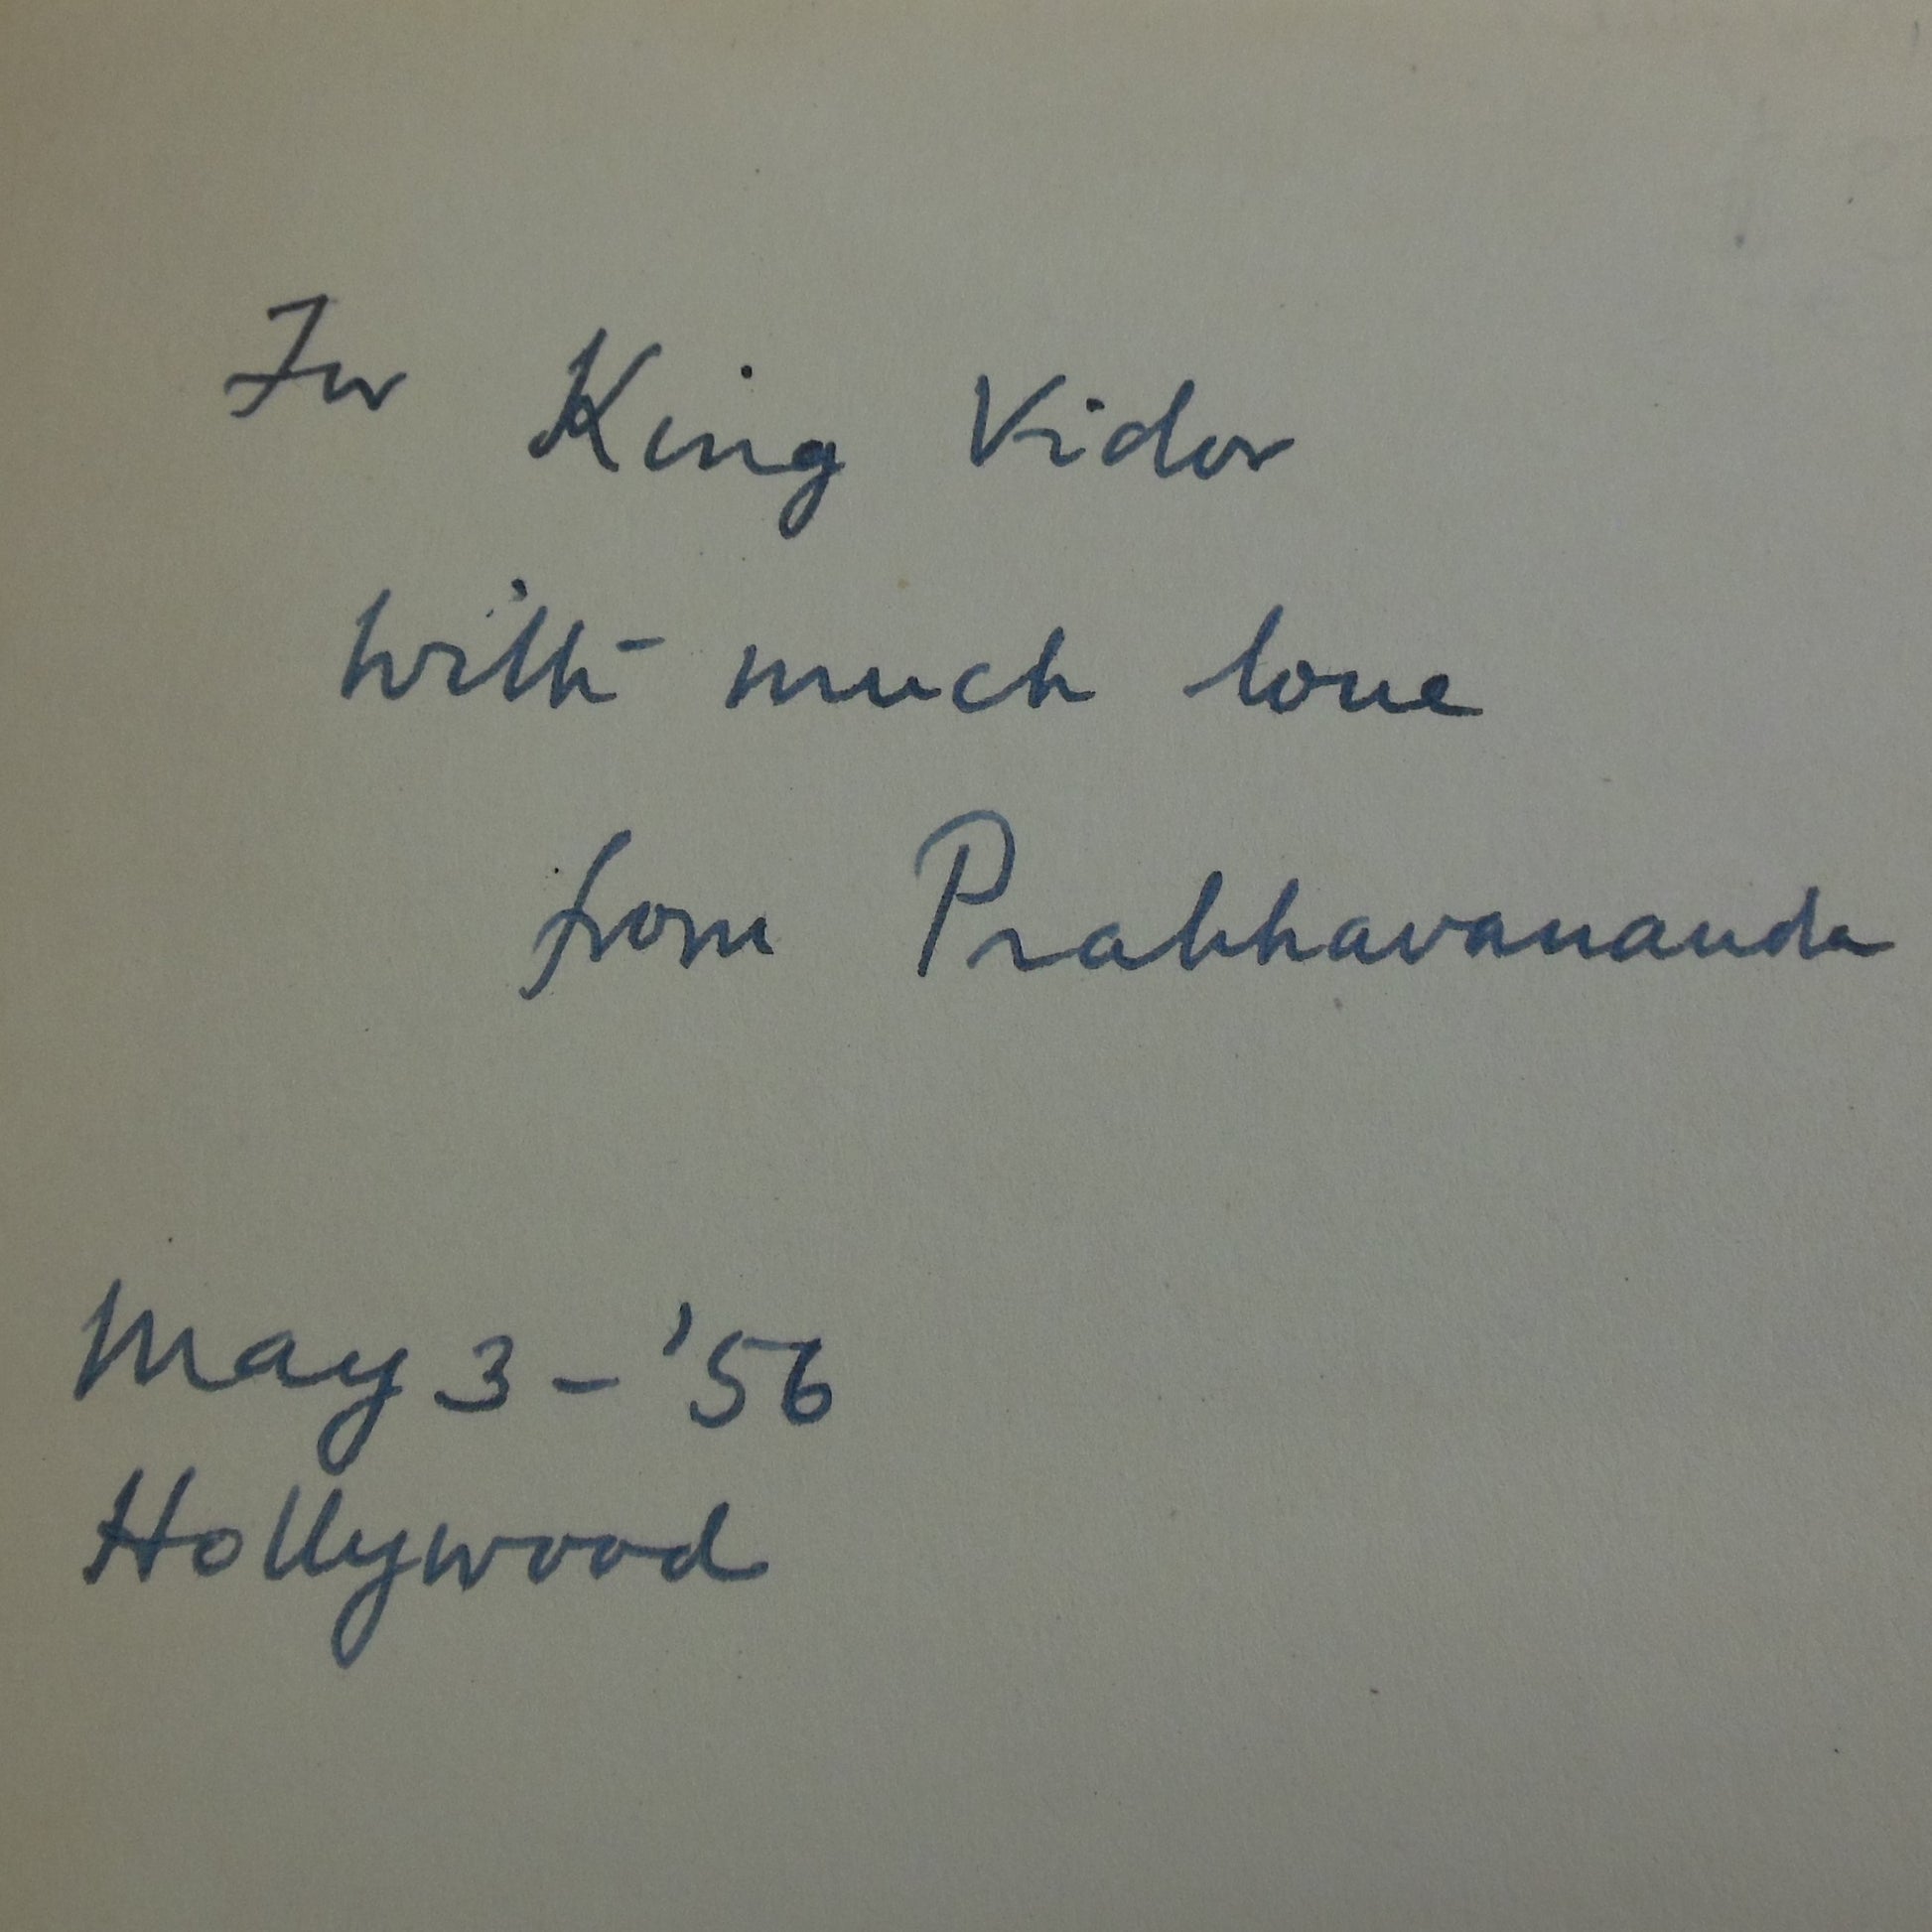 Swami Prabhavananda Signed Book to King Vidor - Vilwamangal Girish Ghosh 1956 inscribed